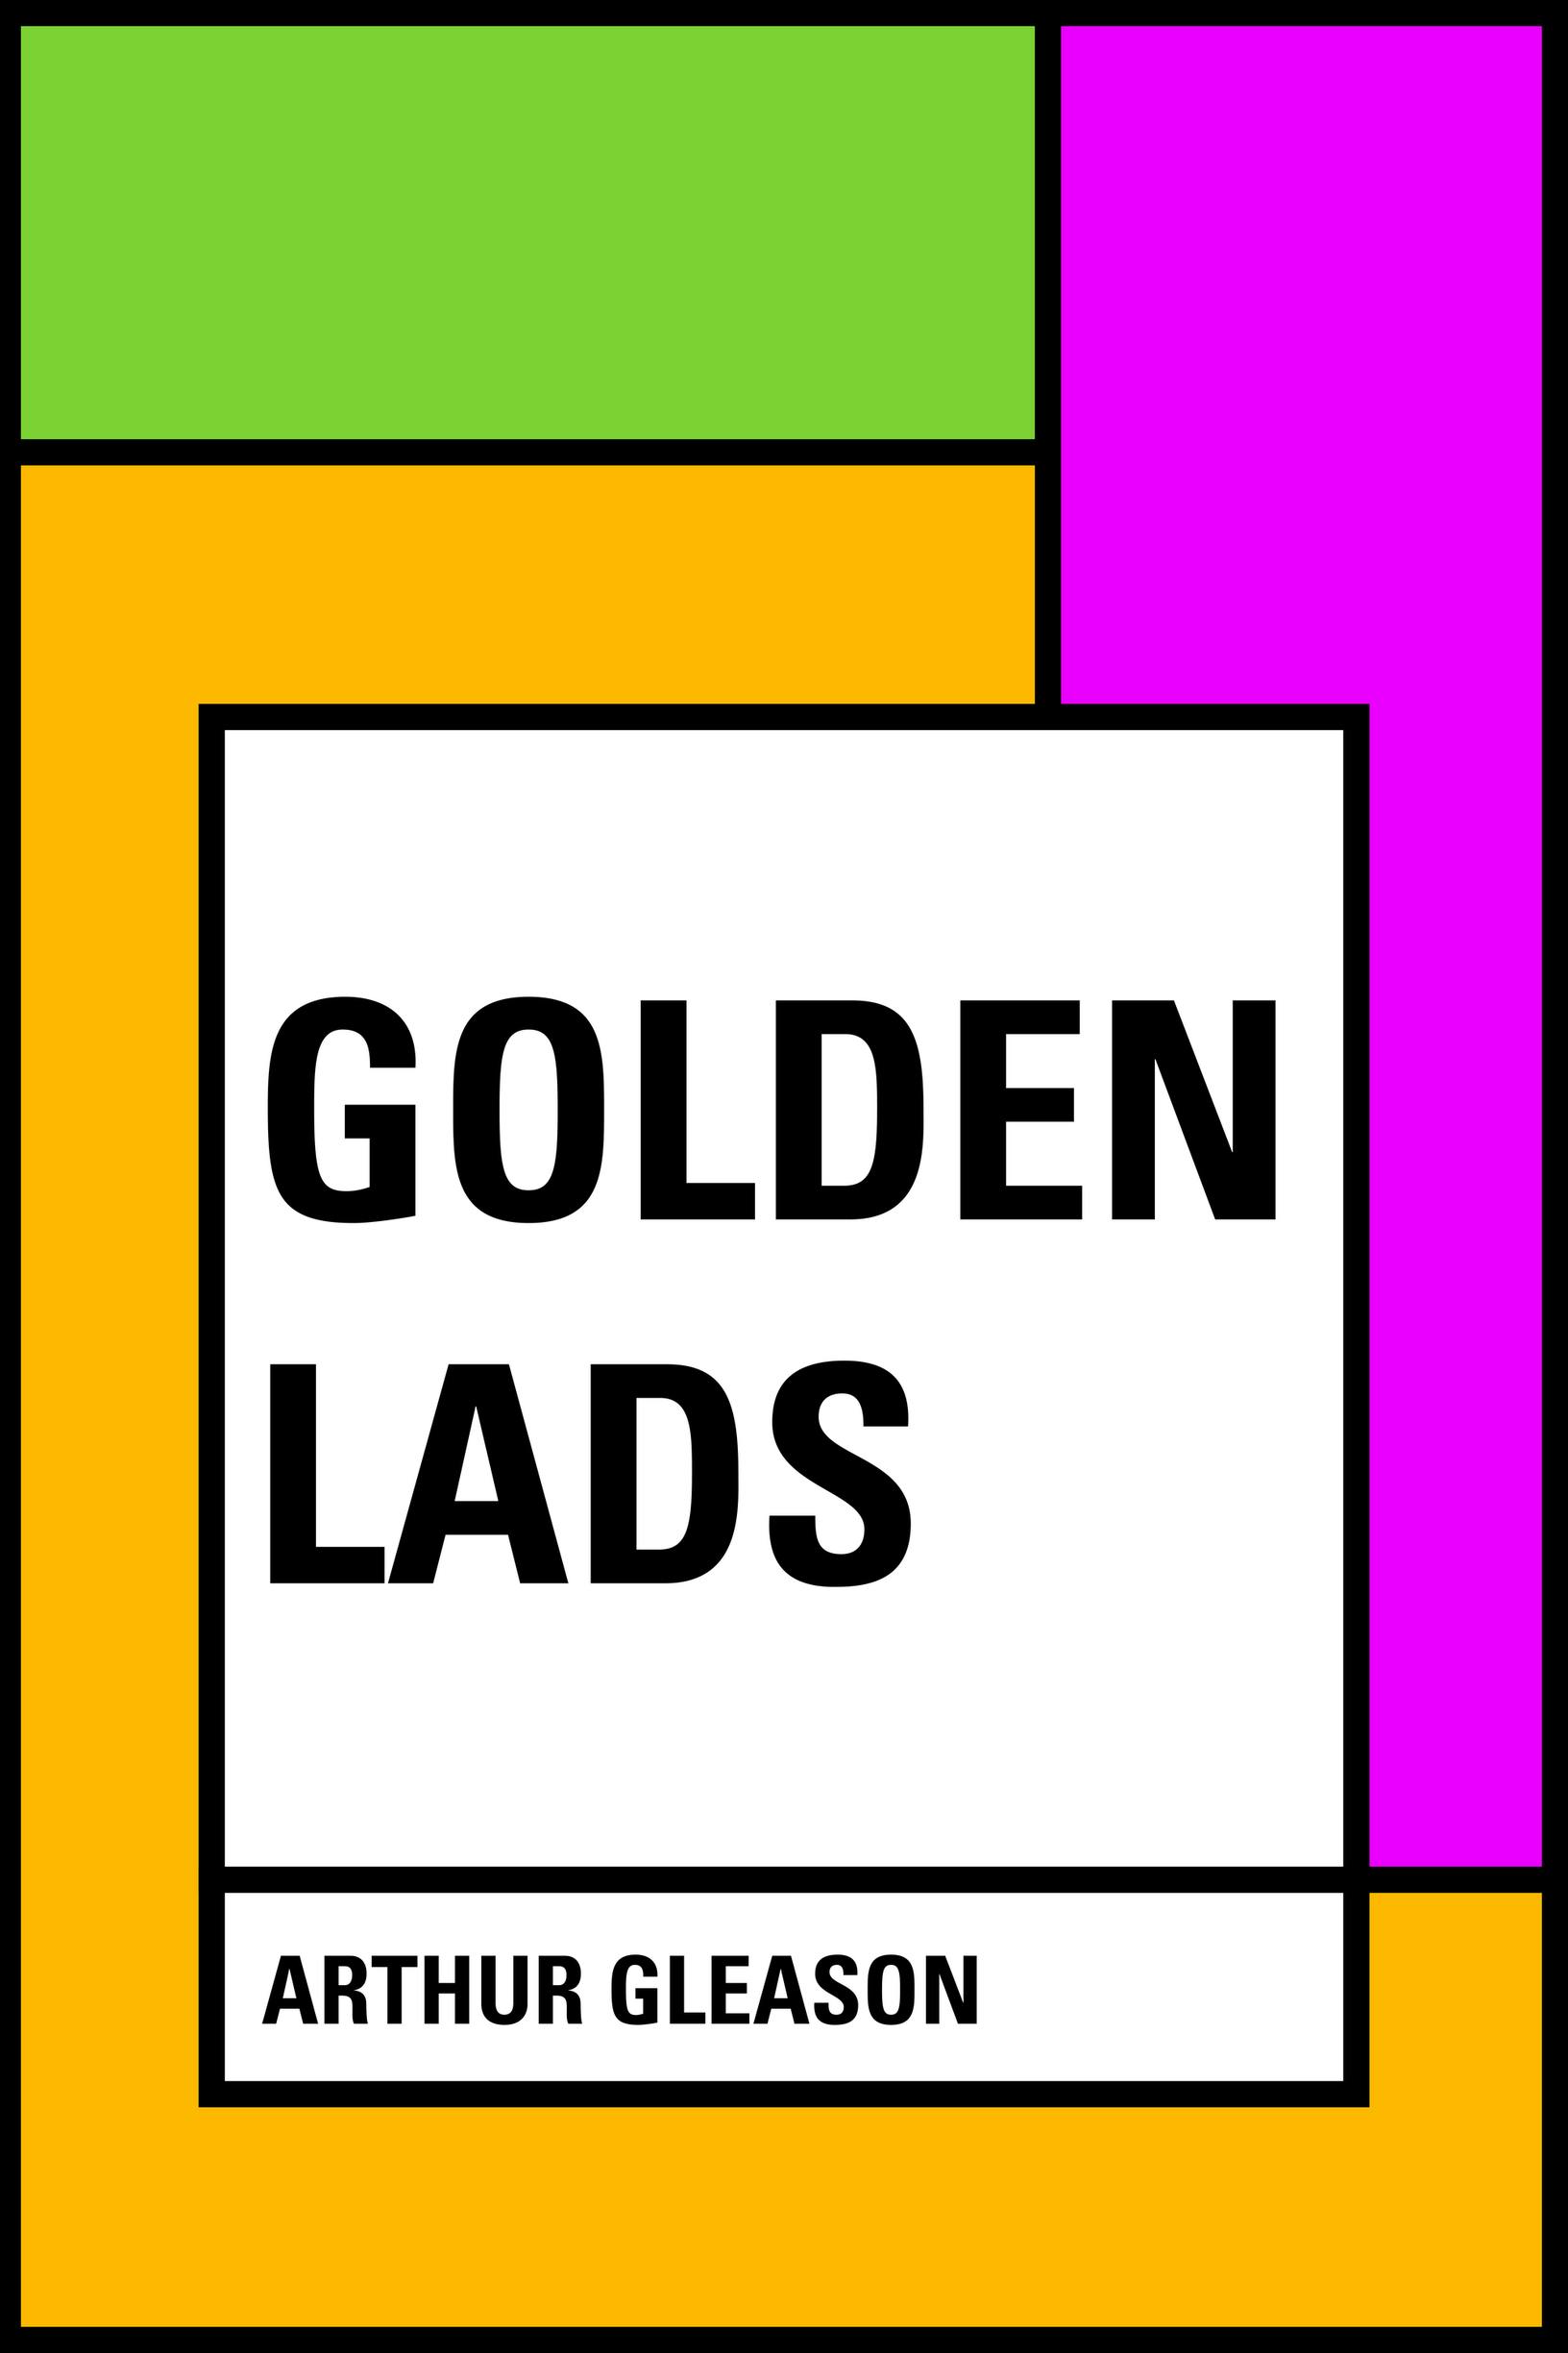 Golden Lads - undefined